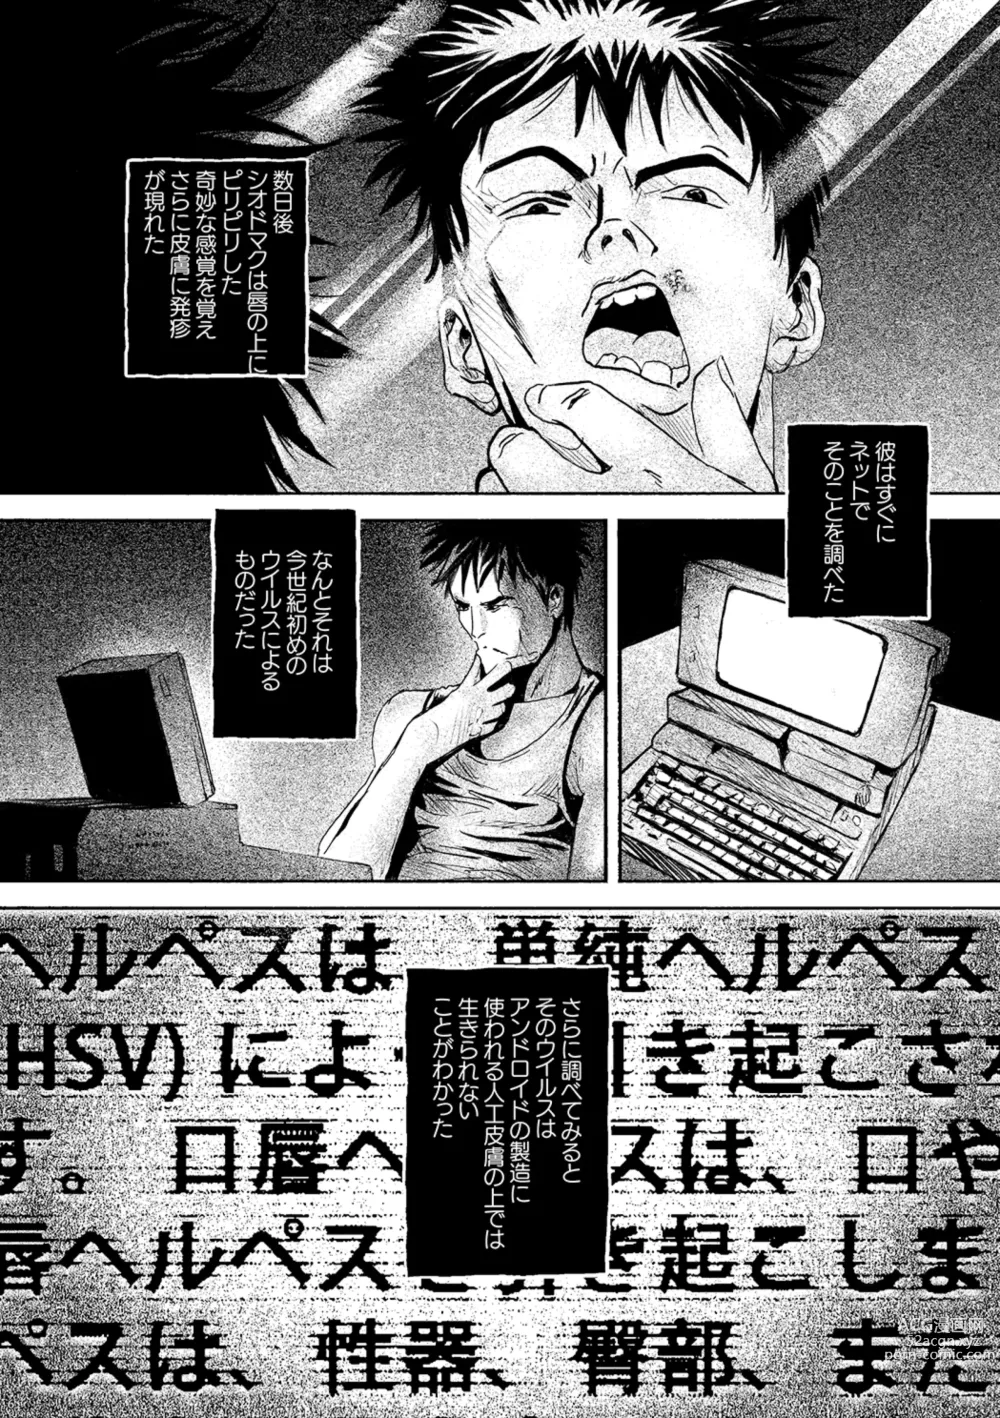 Page 6 of manga AVALON 11-gou